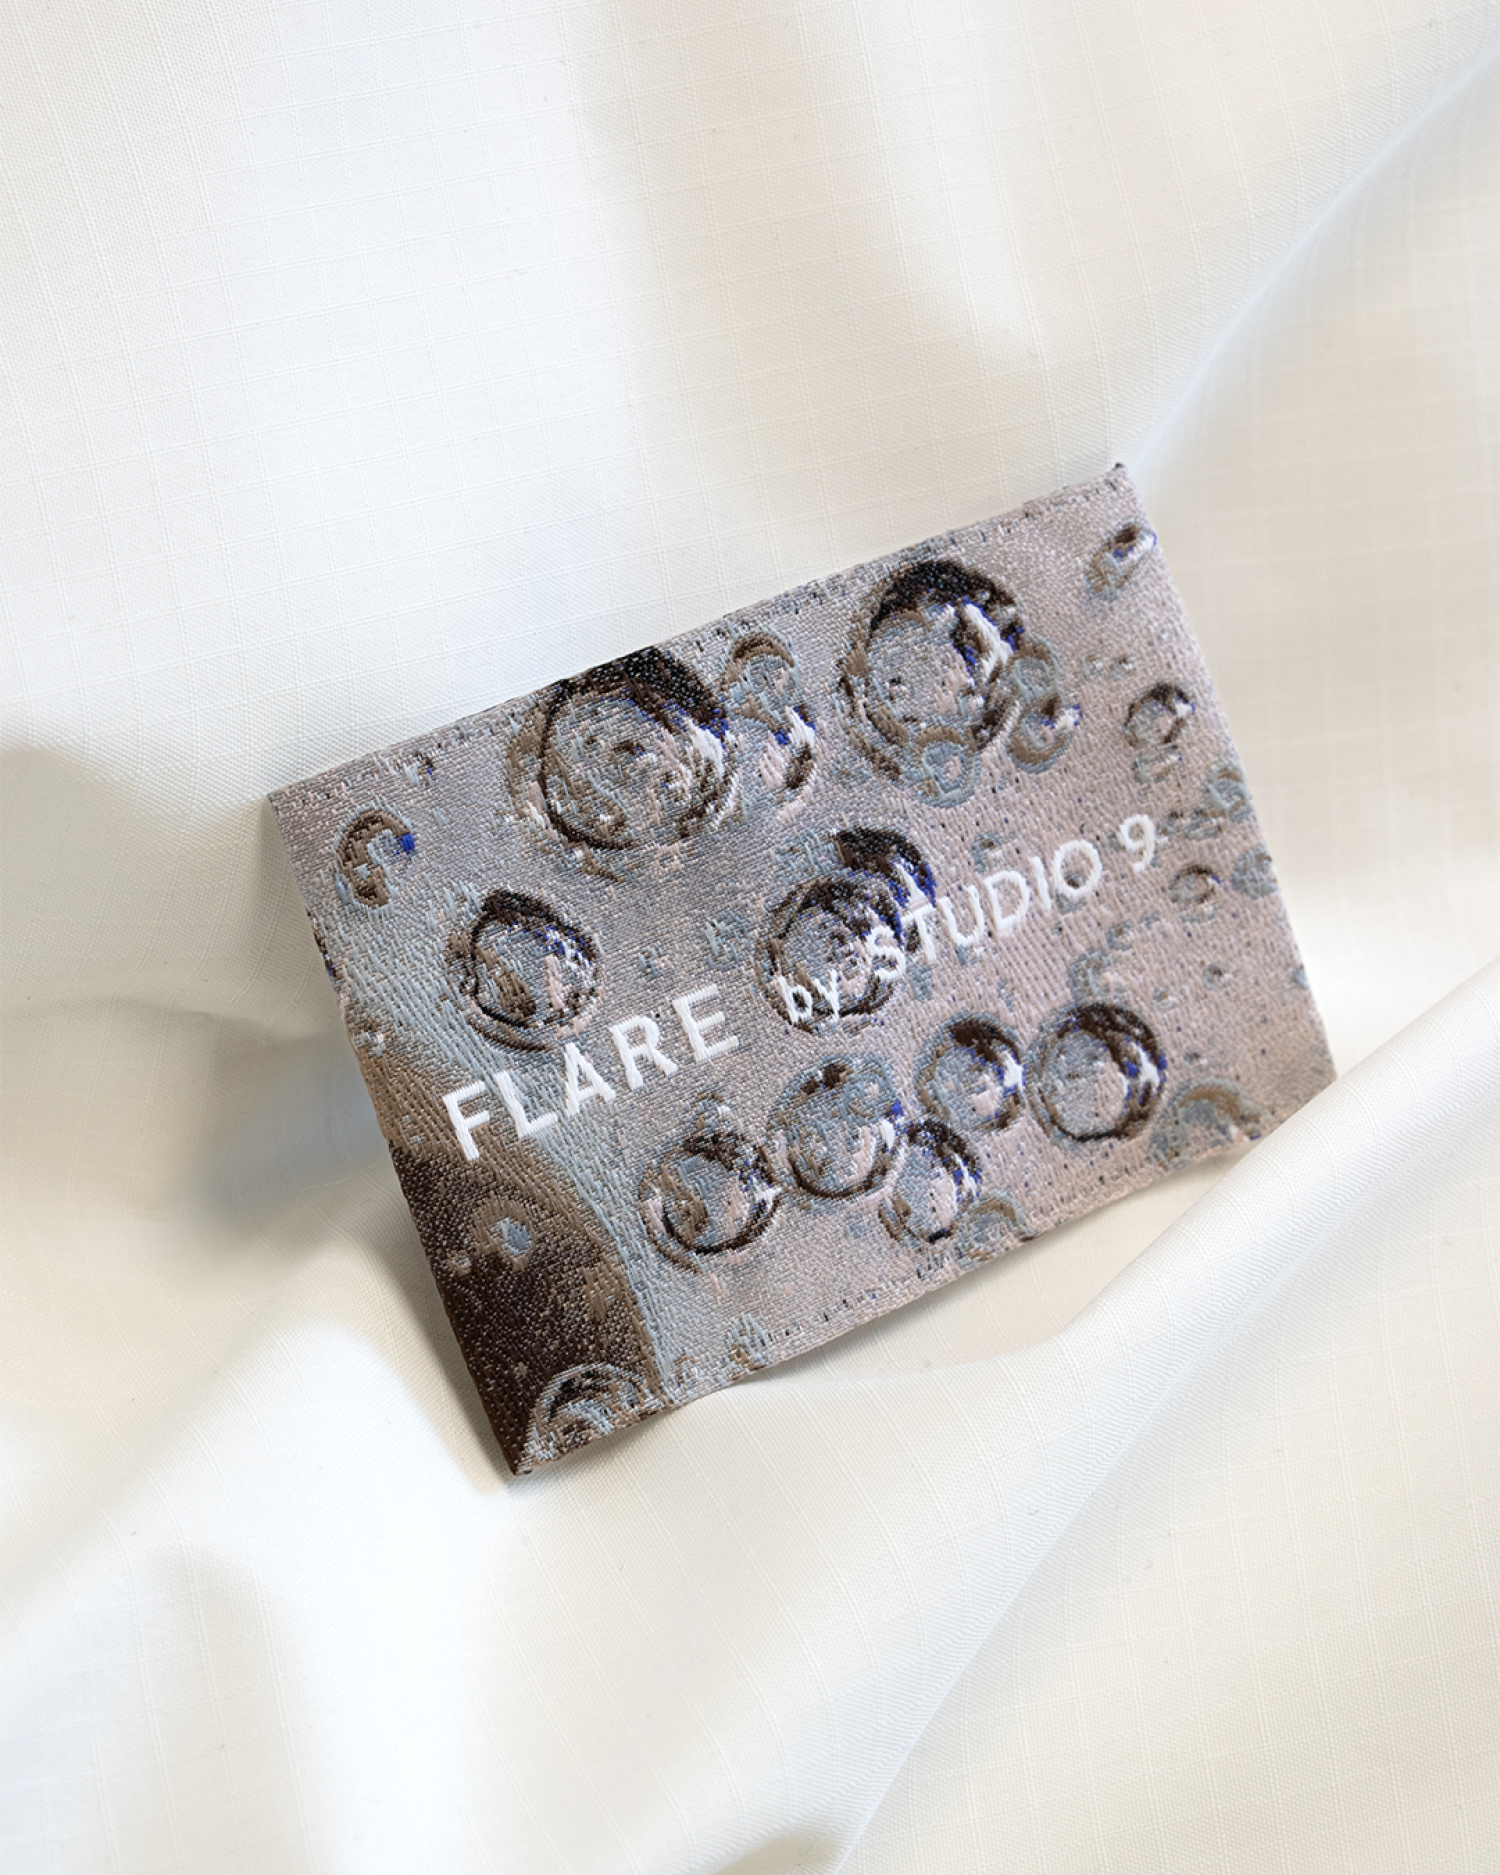 Munich Fabric Start & FLARE Collection